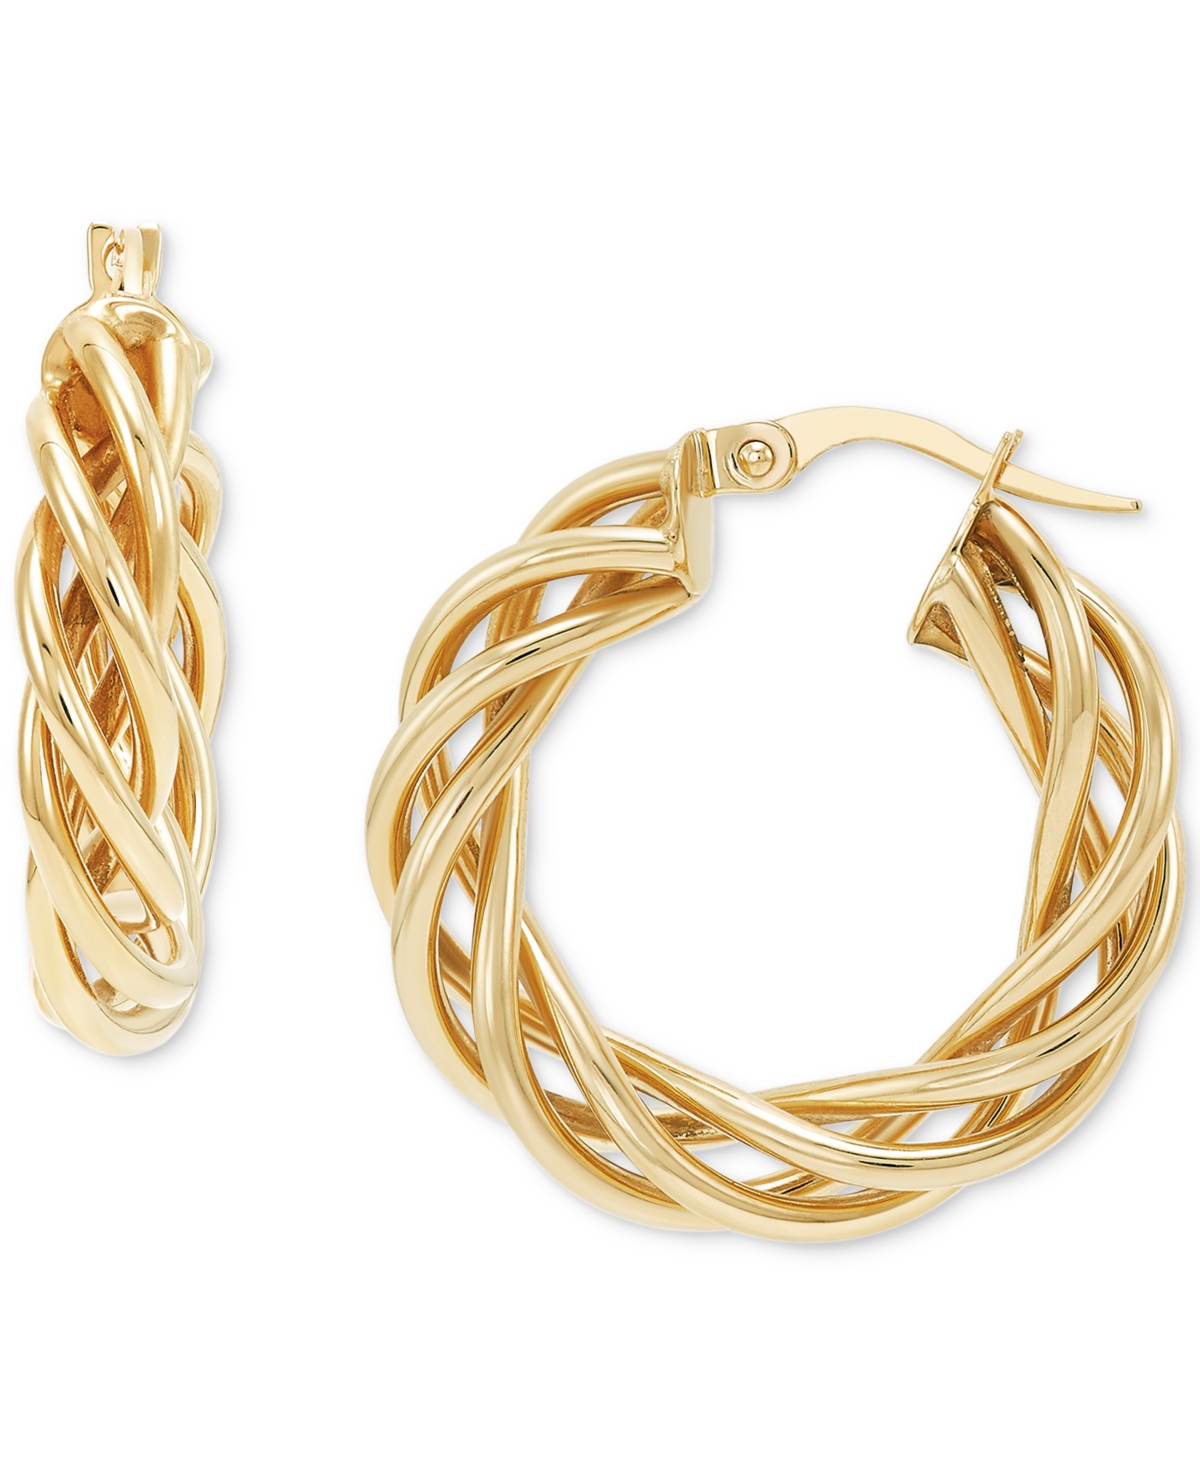 Braided Small Hoop Earrings in 10k Gold, 1" - Gold